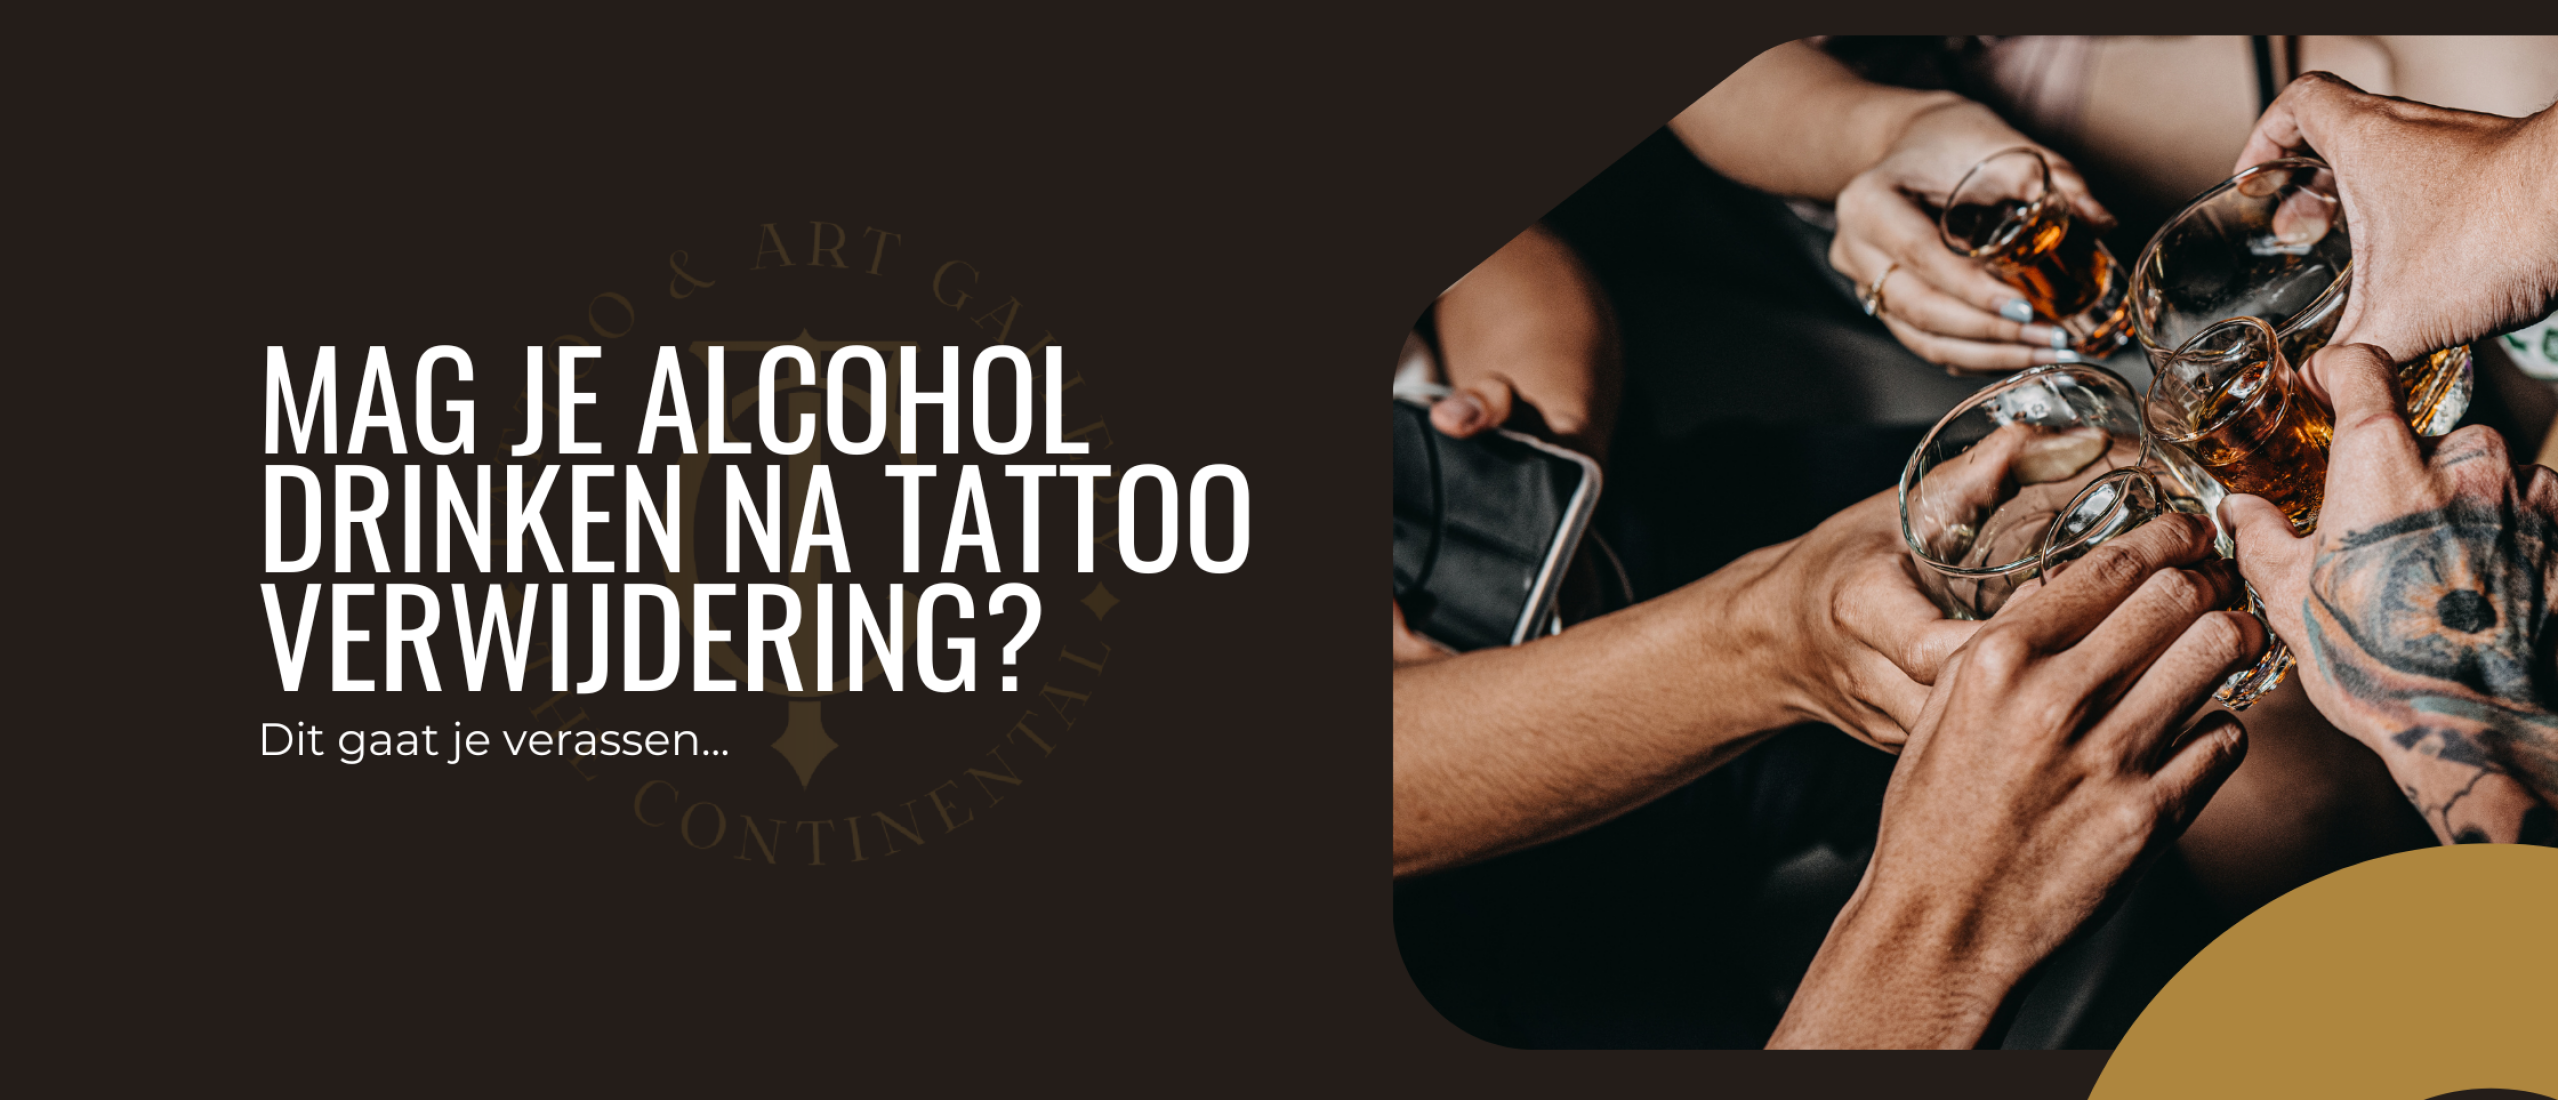 Mag je Alcohol Drinken na Tattoo verwijdering?